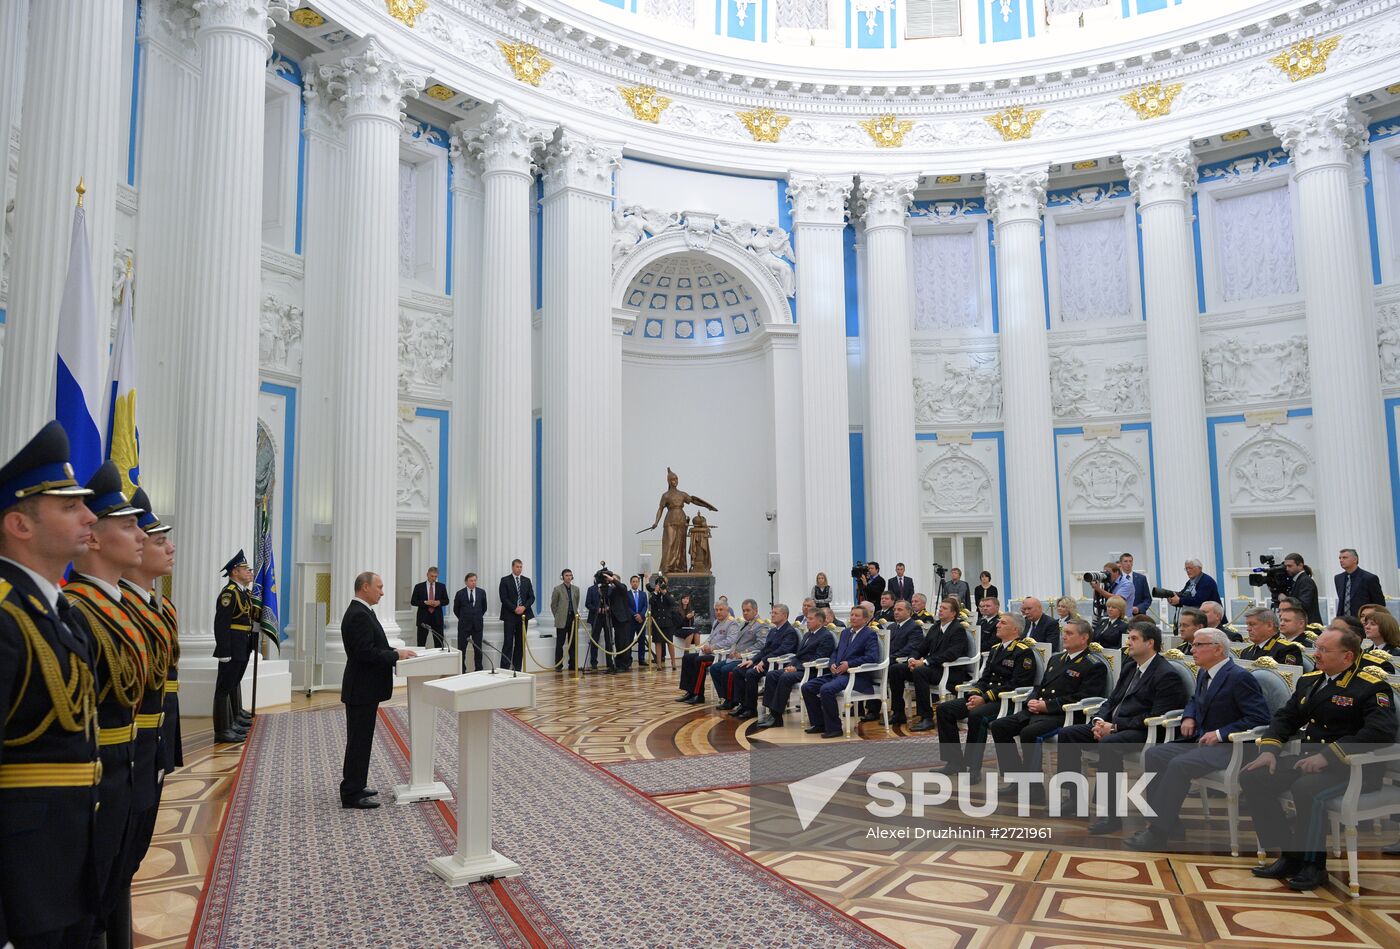 Russian President Vladimir Putin presents banner of Federal Bailiff Service